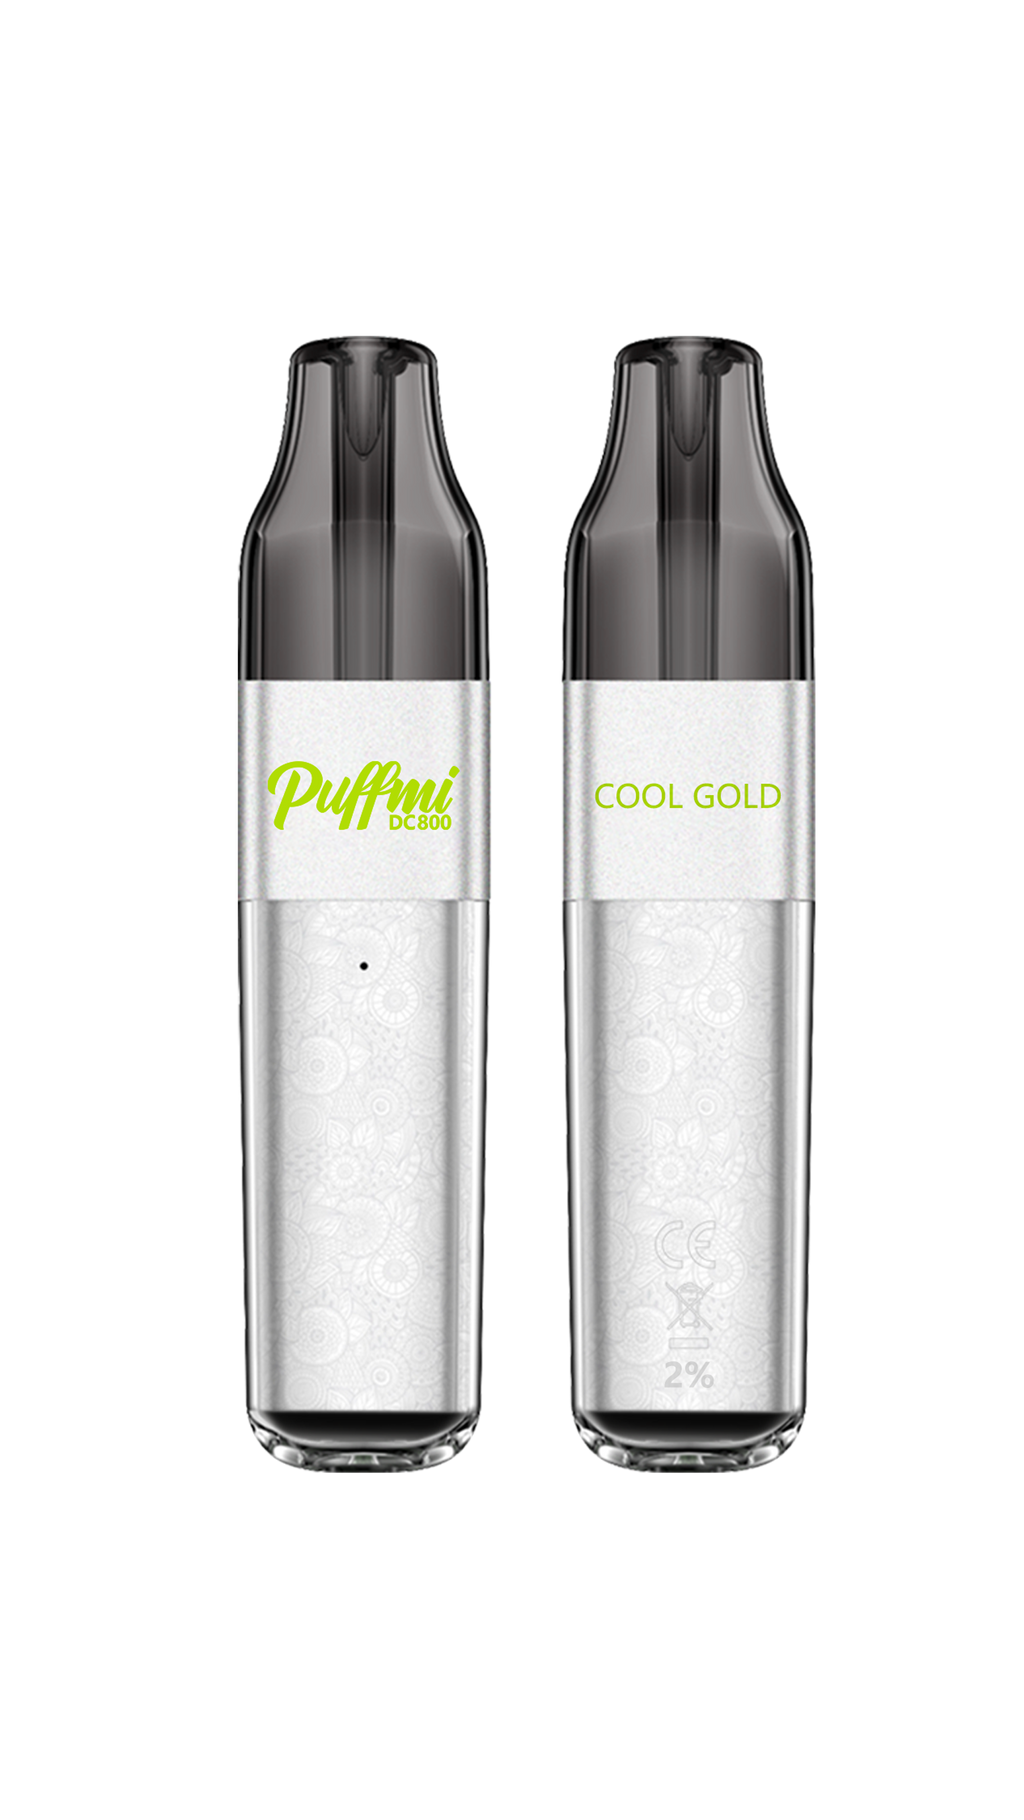 Puffmi DC800 Disposable Kit -  COOL GOLD  2mg Nicotine Disposable Vape